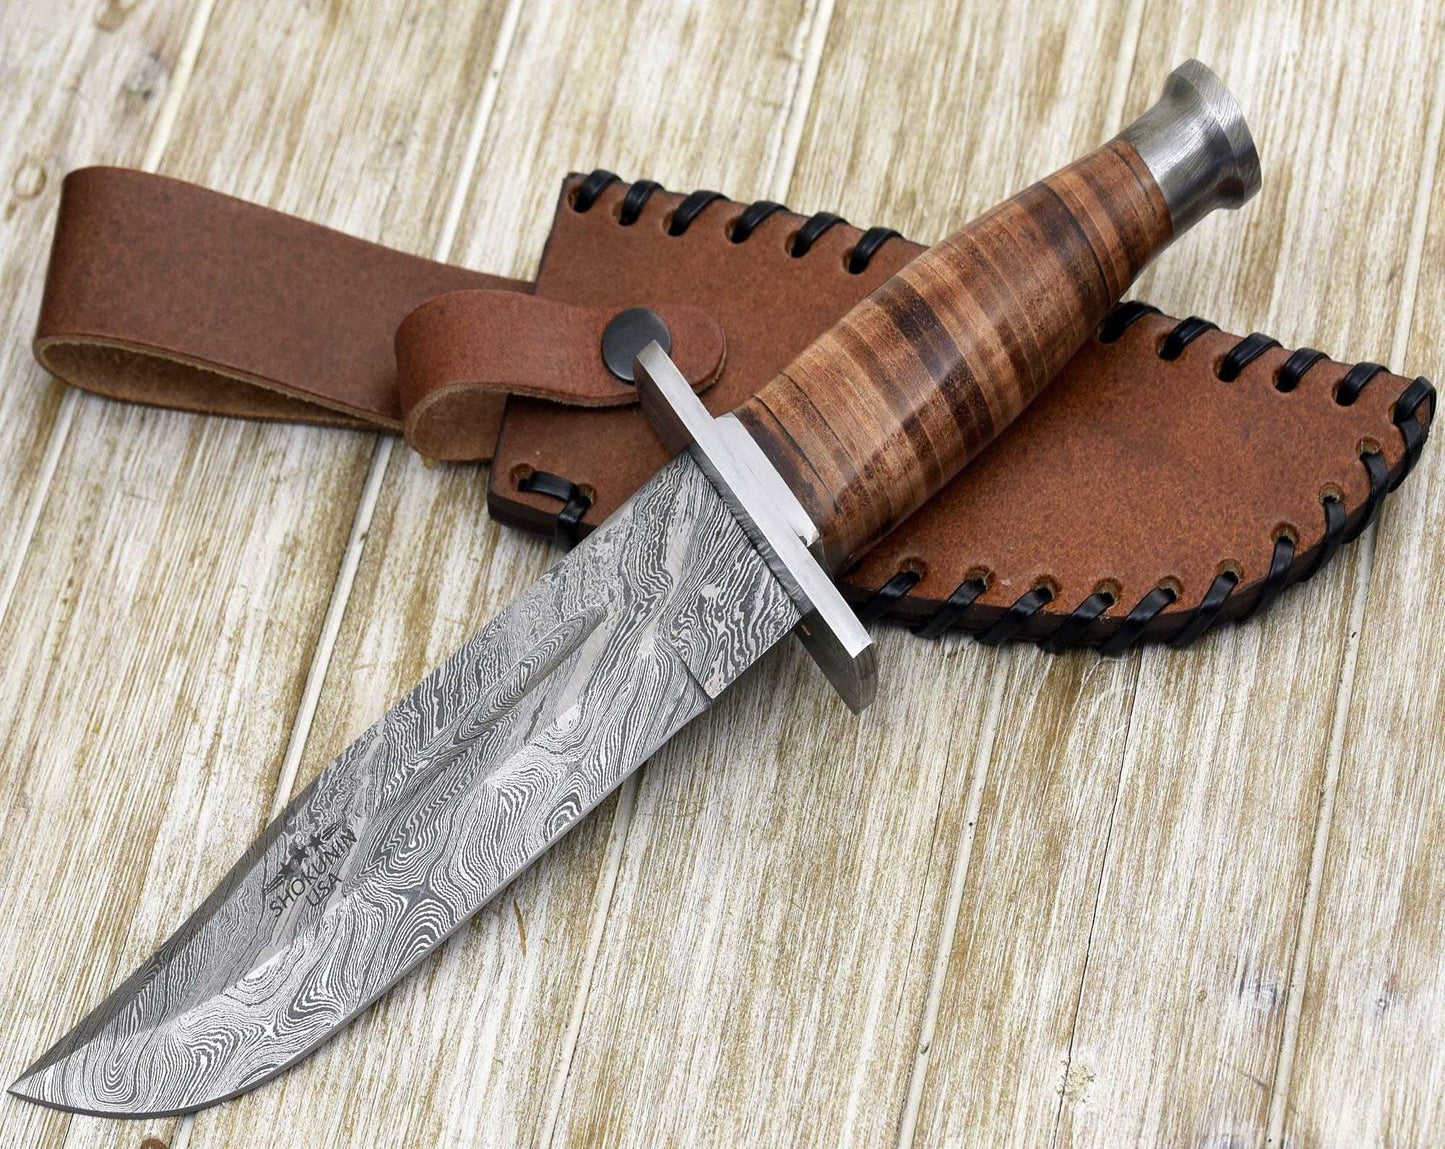 Firestorm Ka-Bar Knife - Damascus Steel Knife with Sheath - Personalized